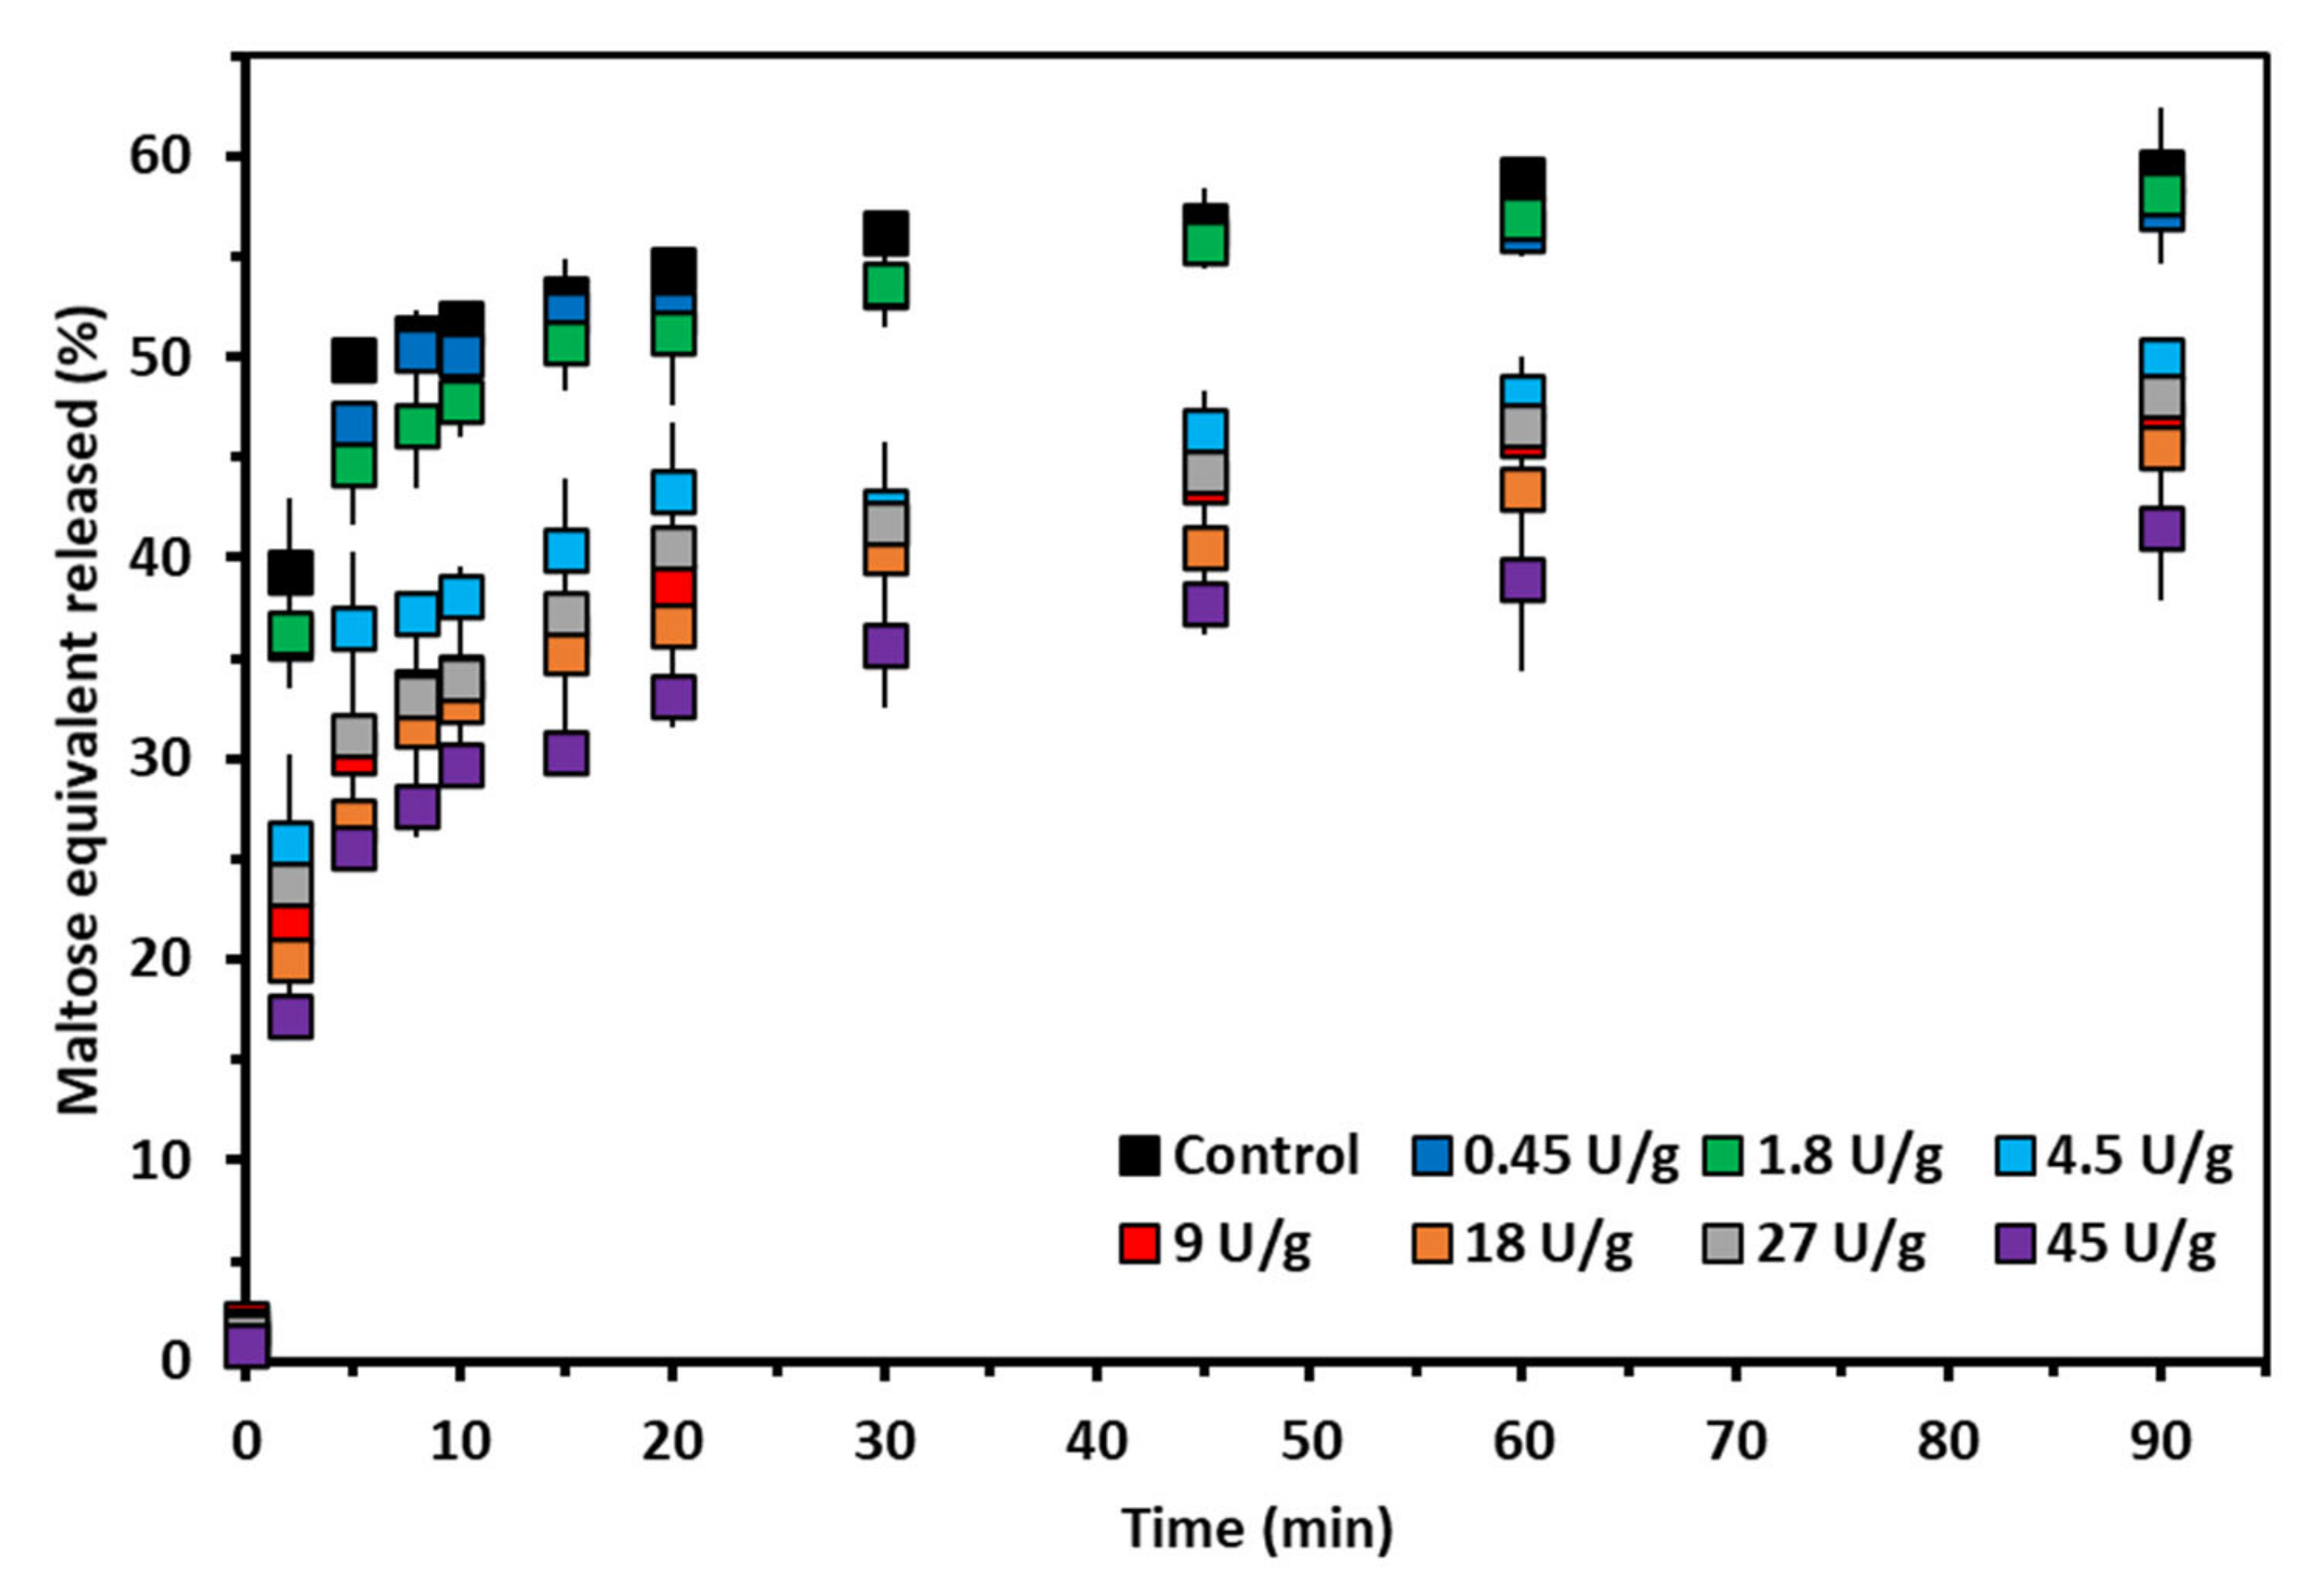 Rapid visco analysis (RVA) profiles of starch suspensions [10.0% w